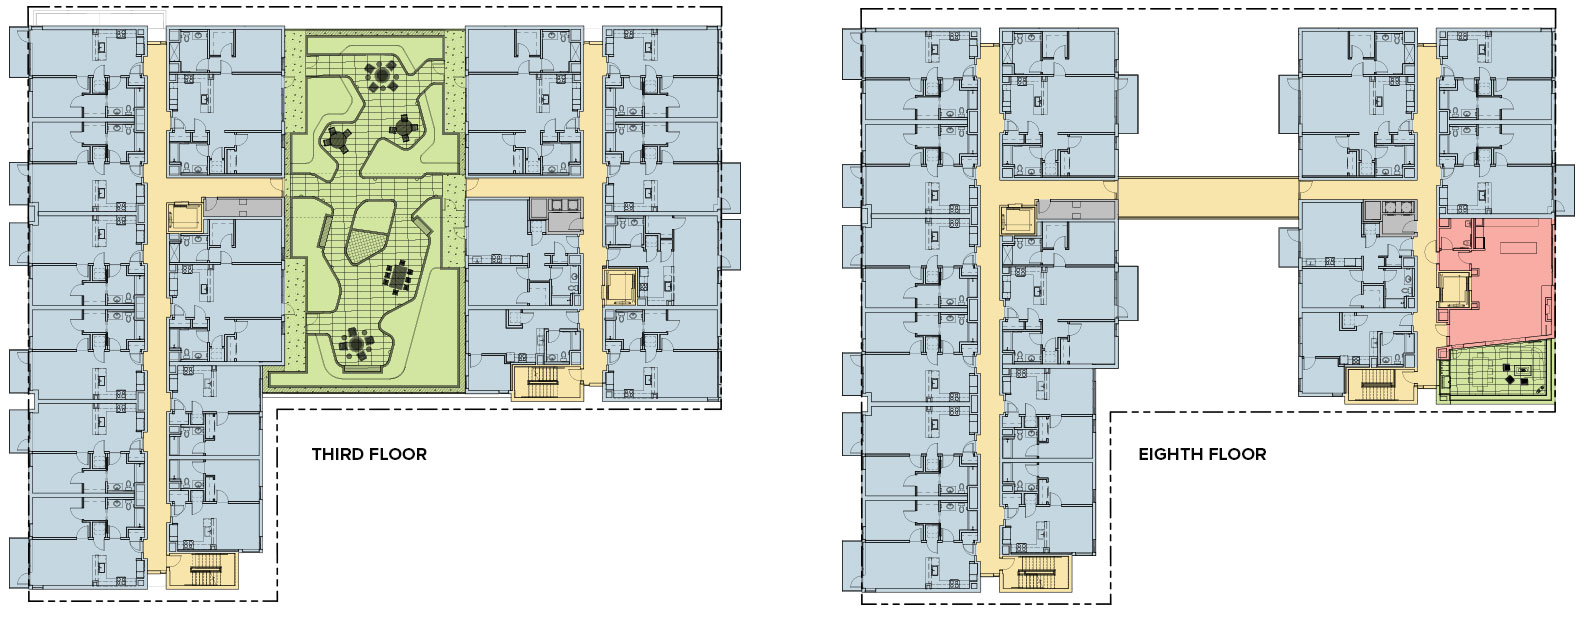 Floor plans for 3rd and 8th floors of 425 Humboldt Street, Santa Rosa, CA